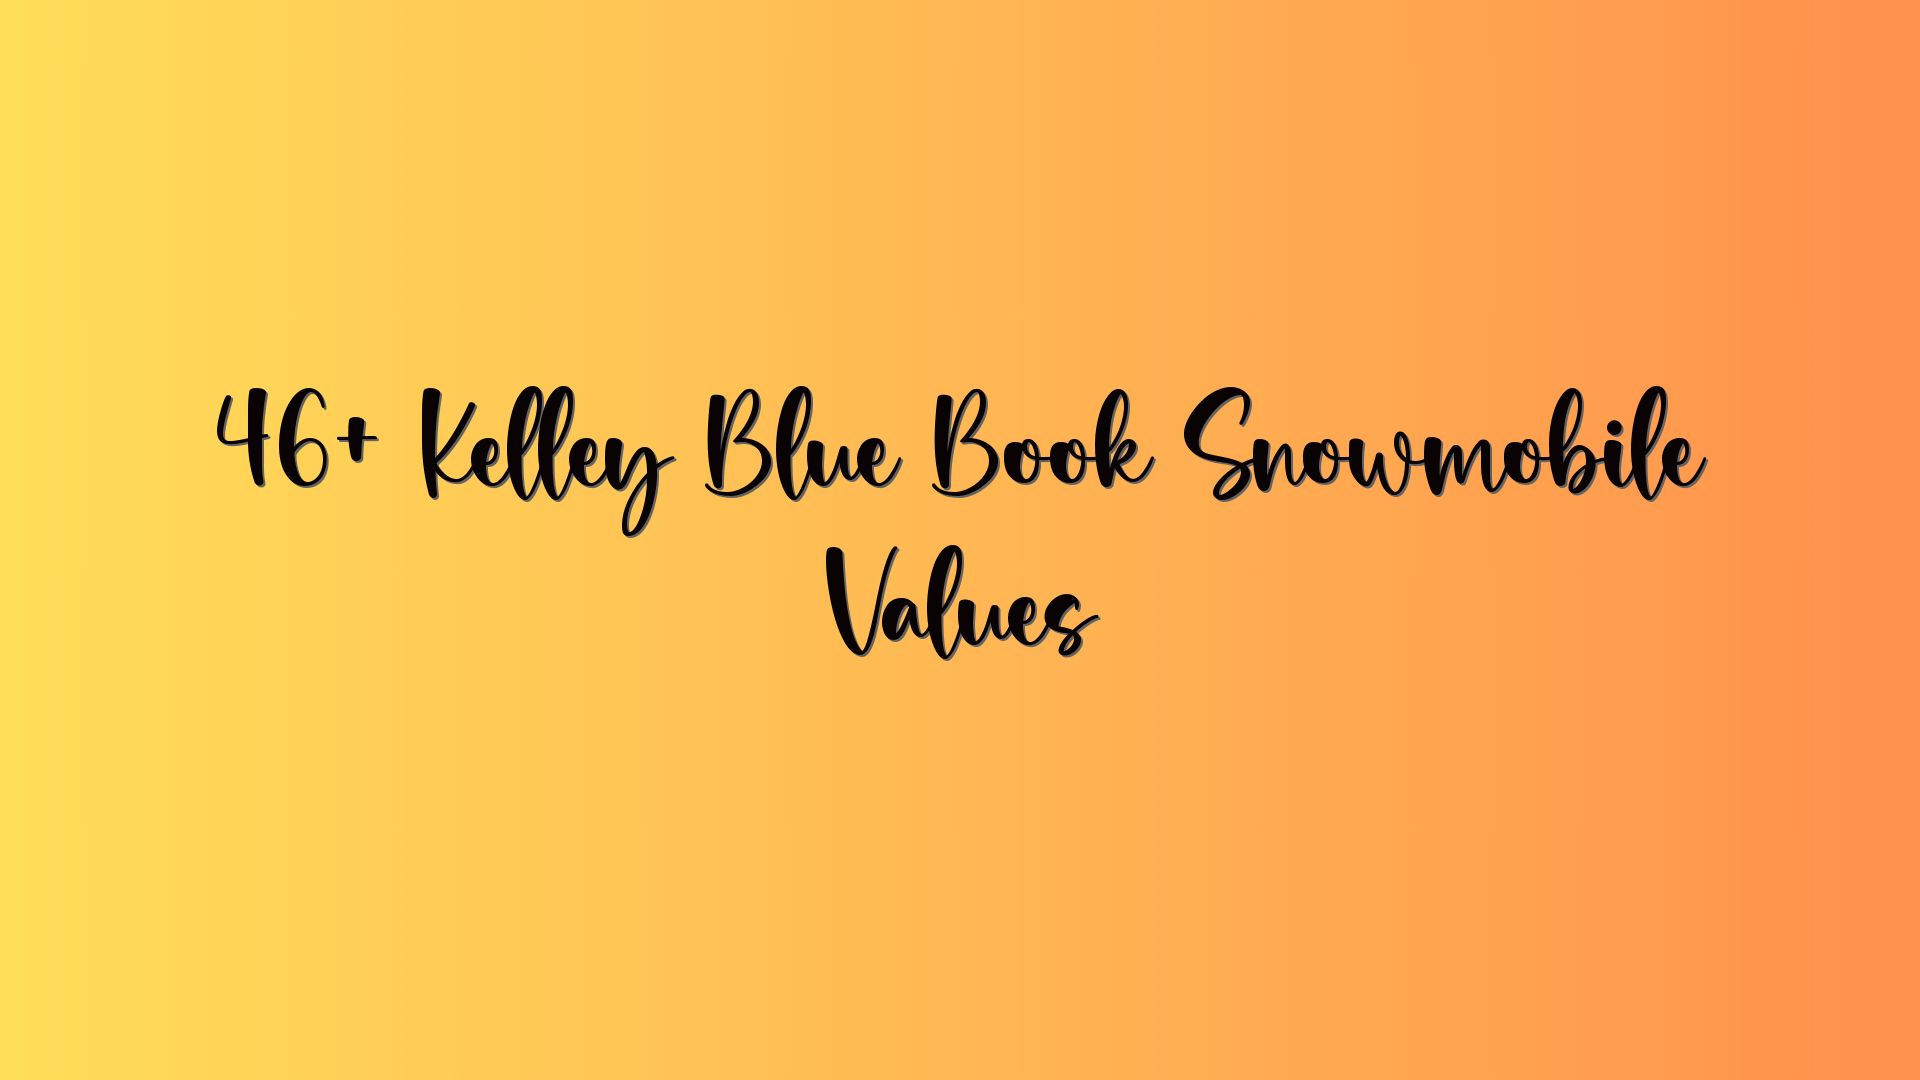 46+ Kelley Blue Book Snowmobile Values